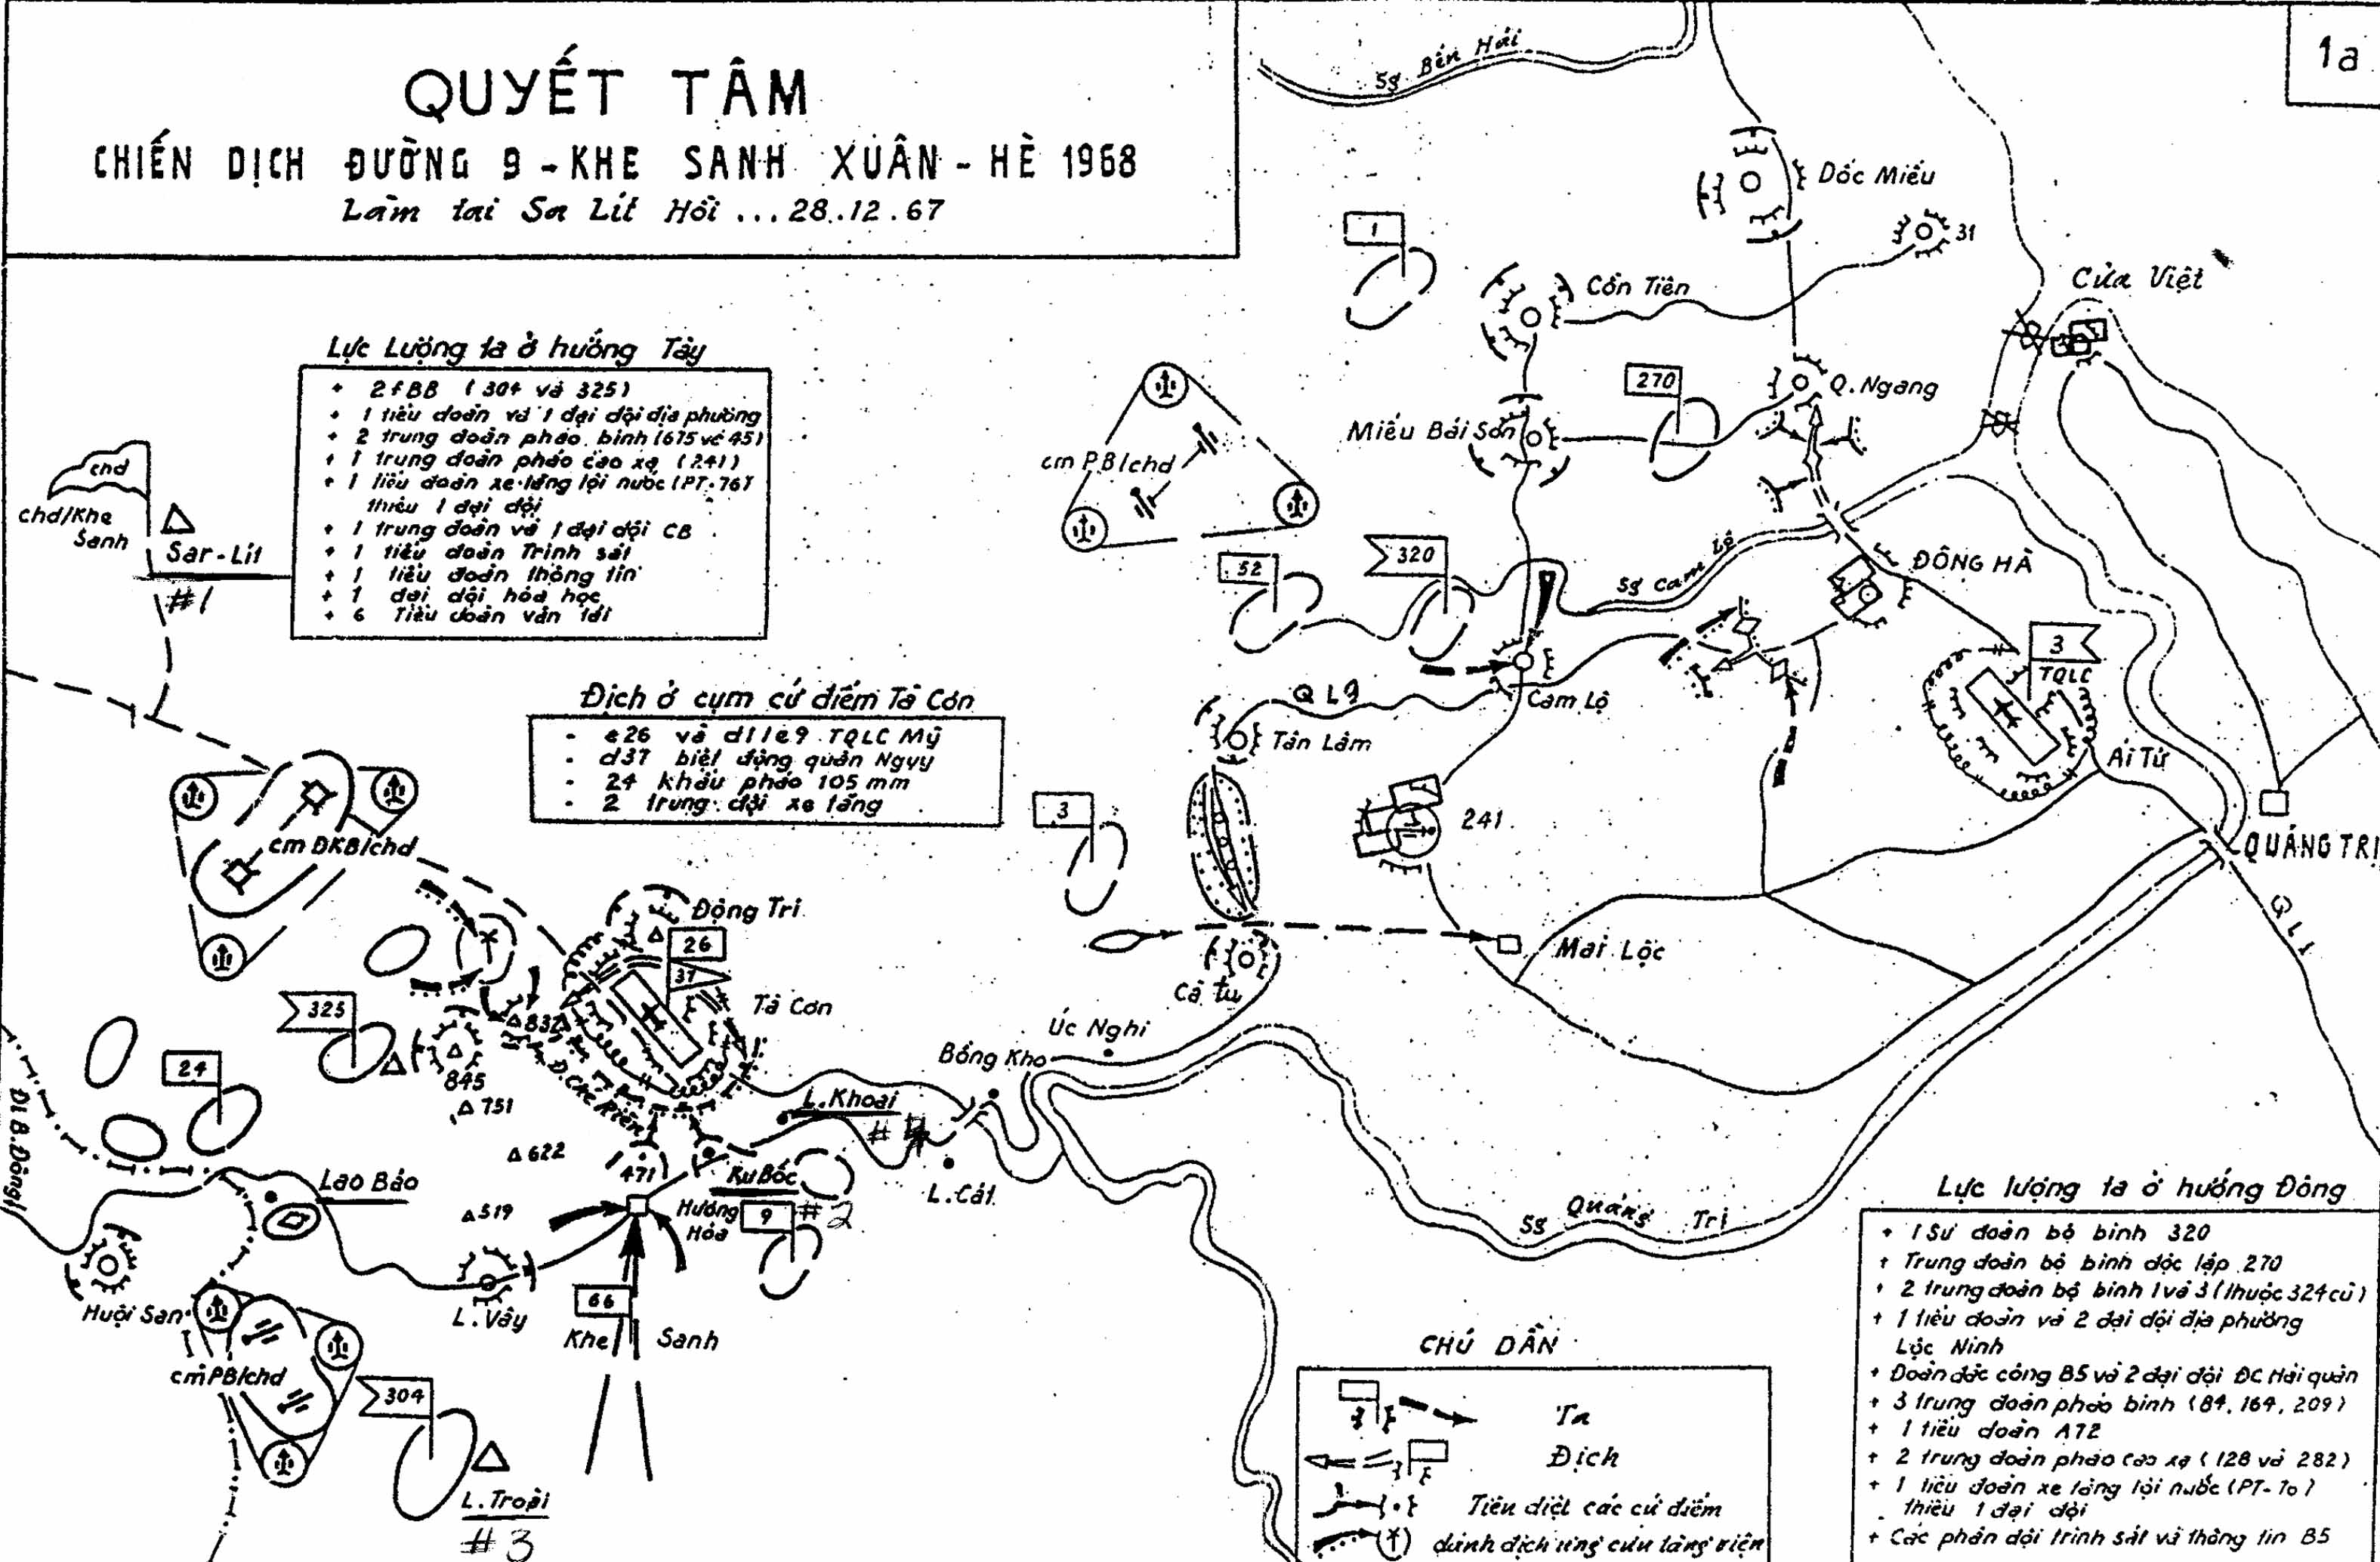 PAVN Map 12-28-67